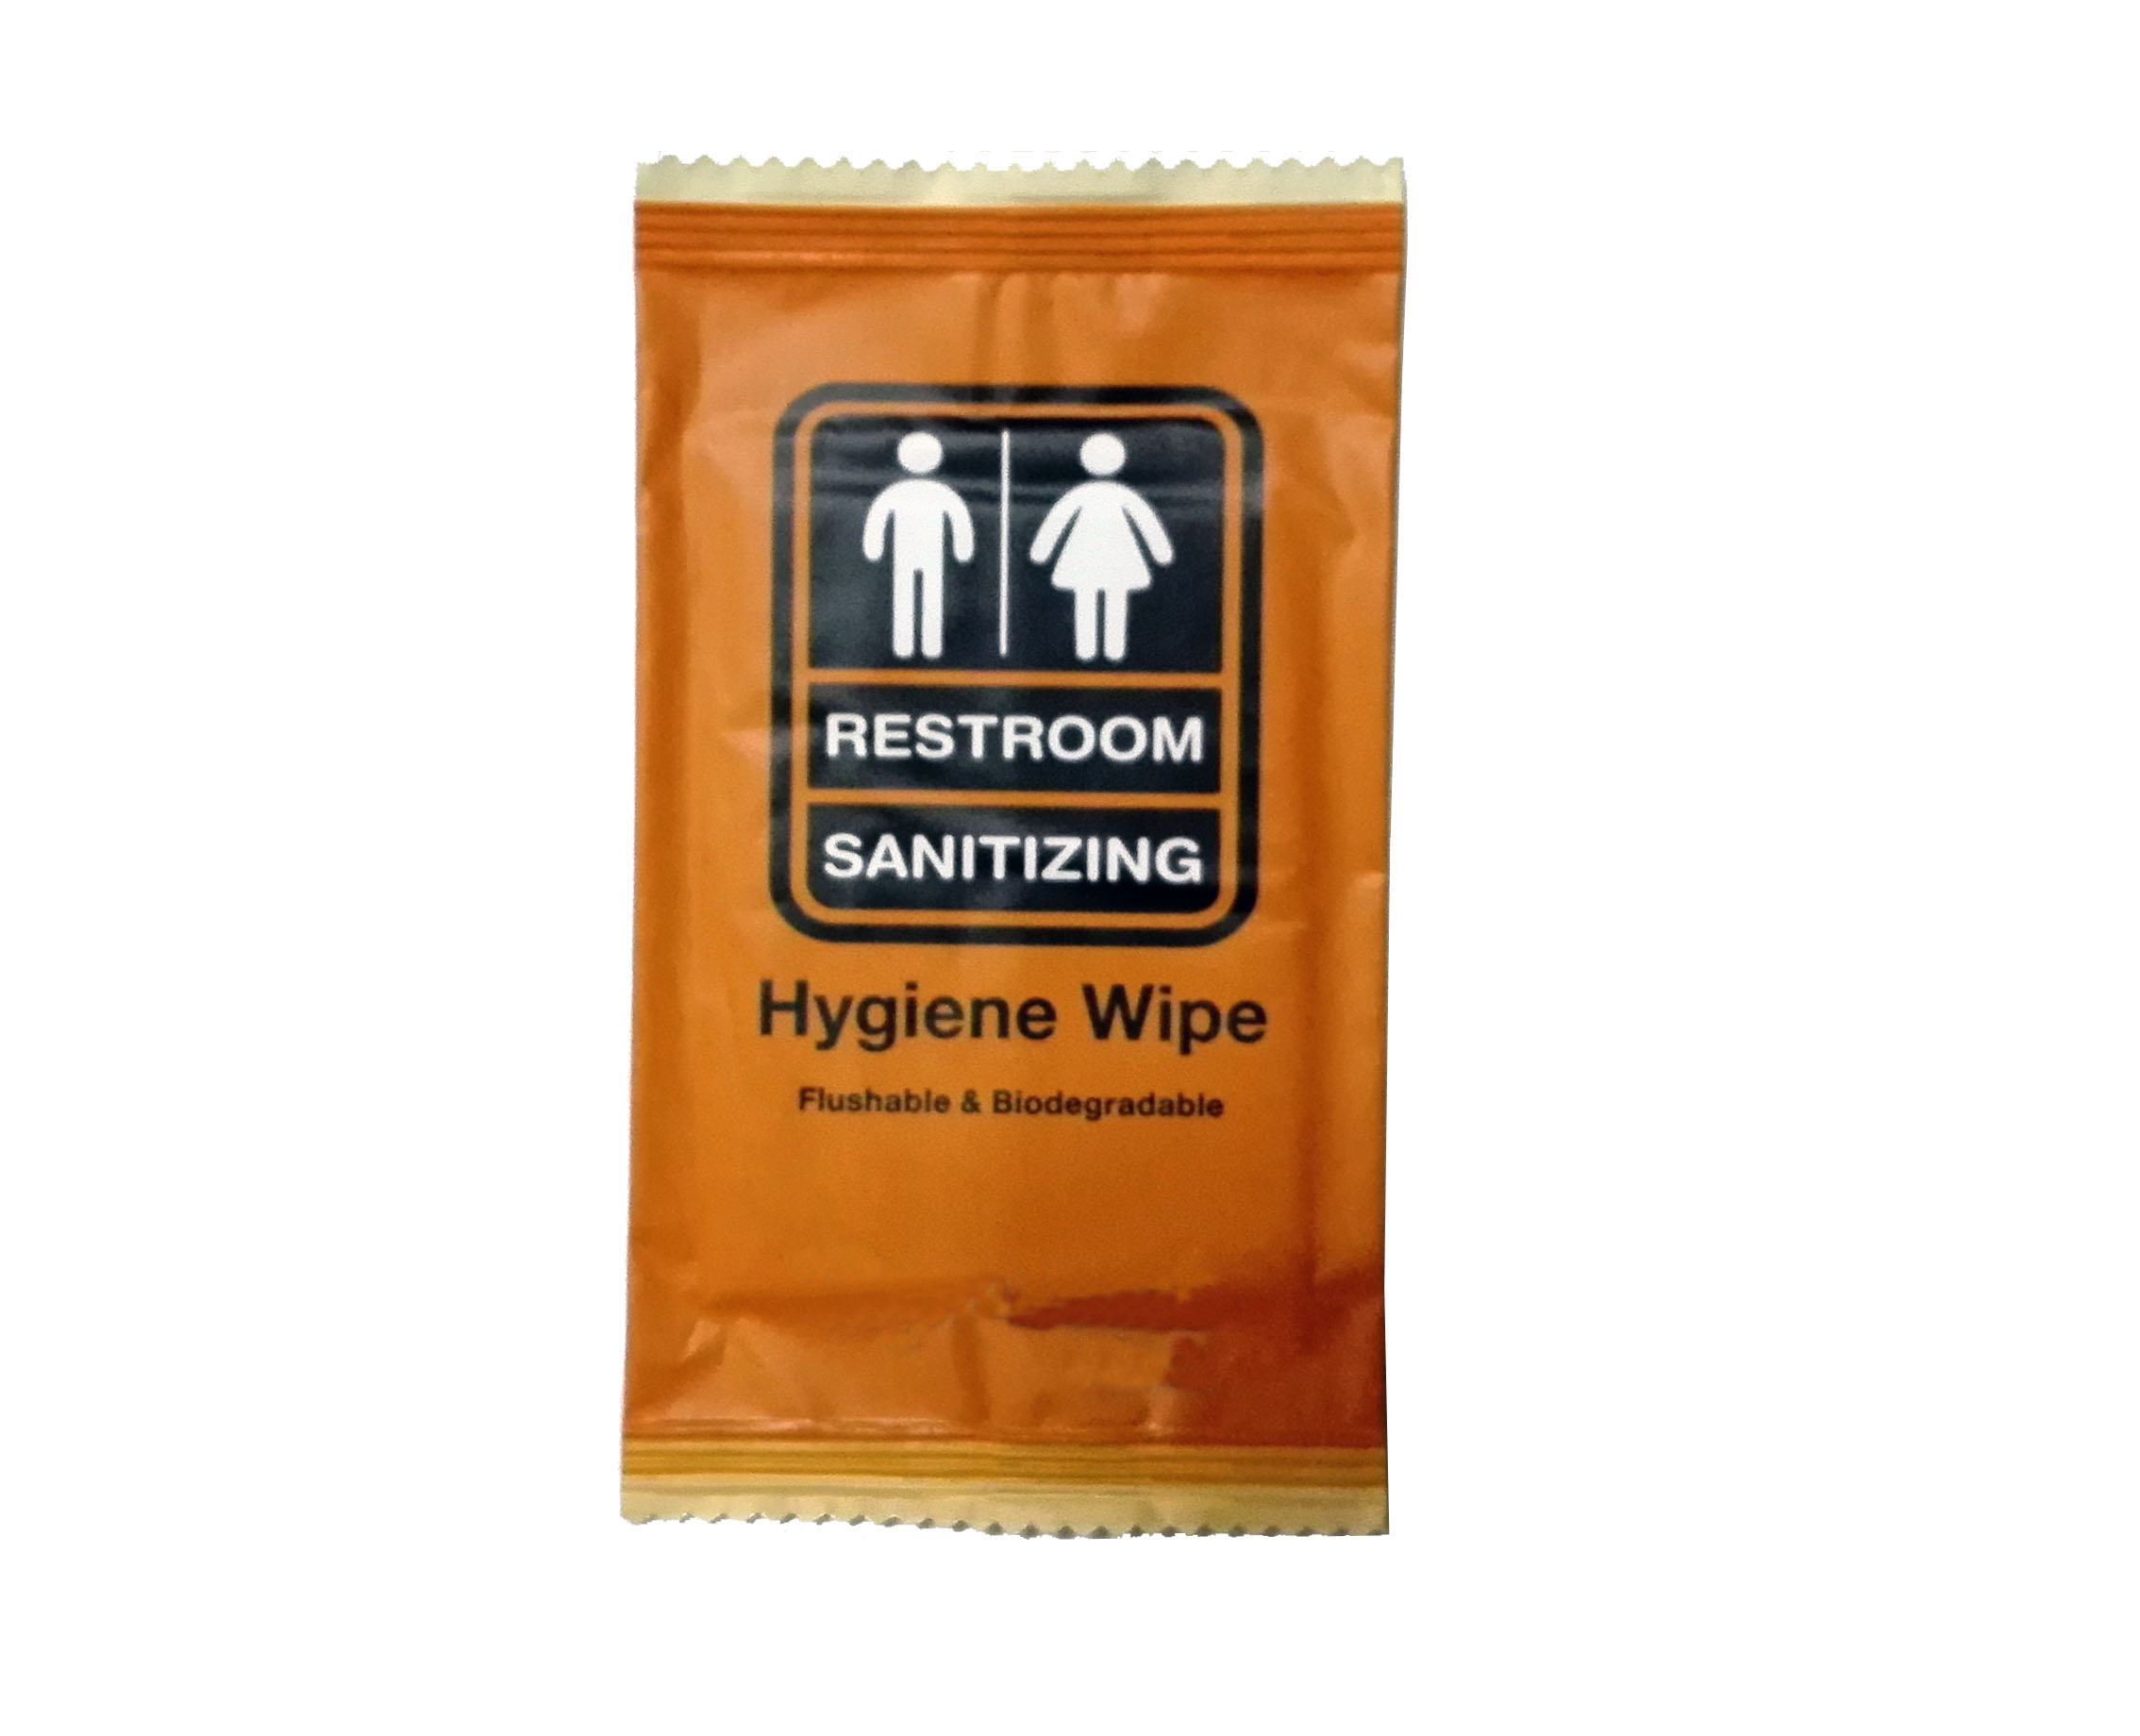 Restroom sanitizing hygiene flushalbe wipes